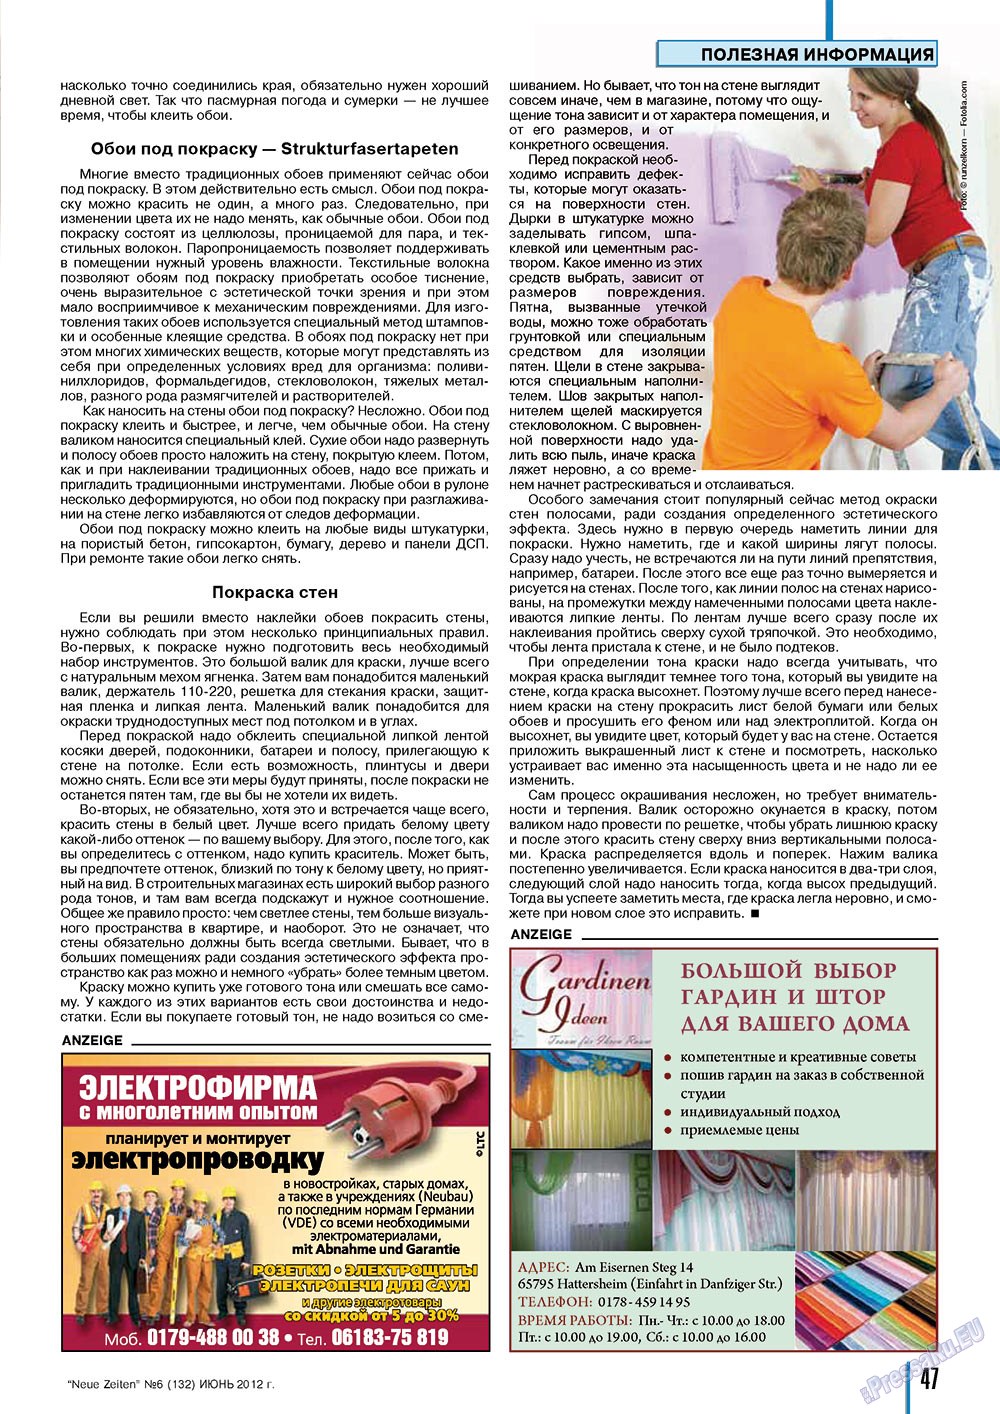 Neue Zeiten (журнал). 2012 год, номер 6, стр. 47